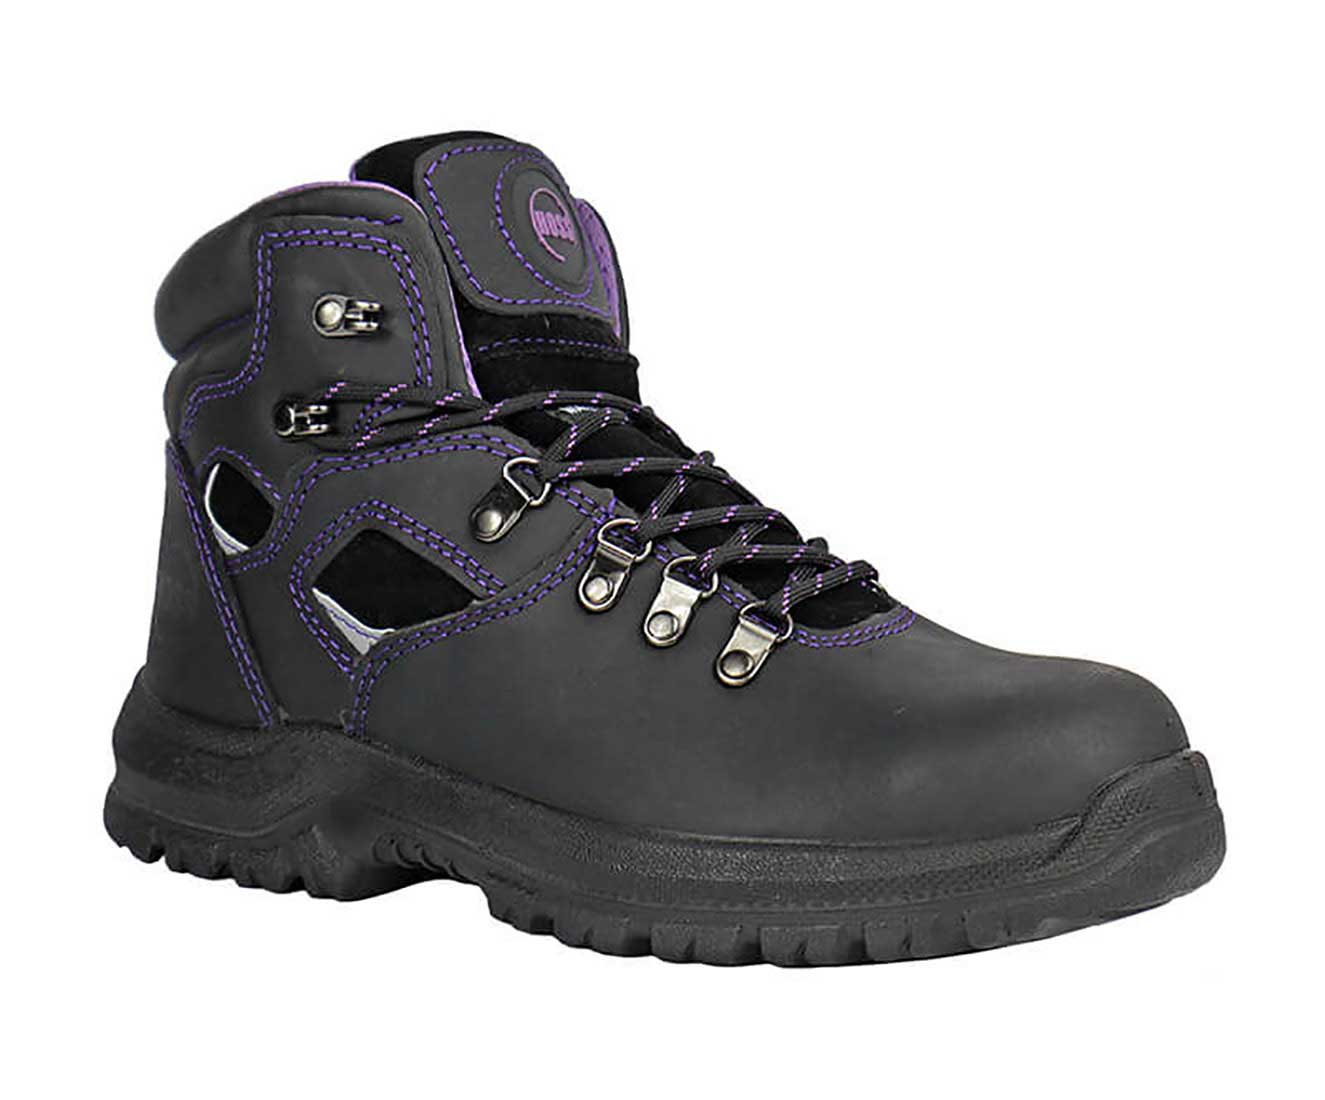 Hoss Boots Lily Black - 70165 - Women's 6 Steel Toe Work Boot